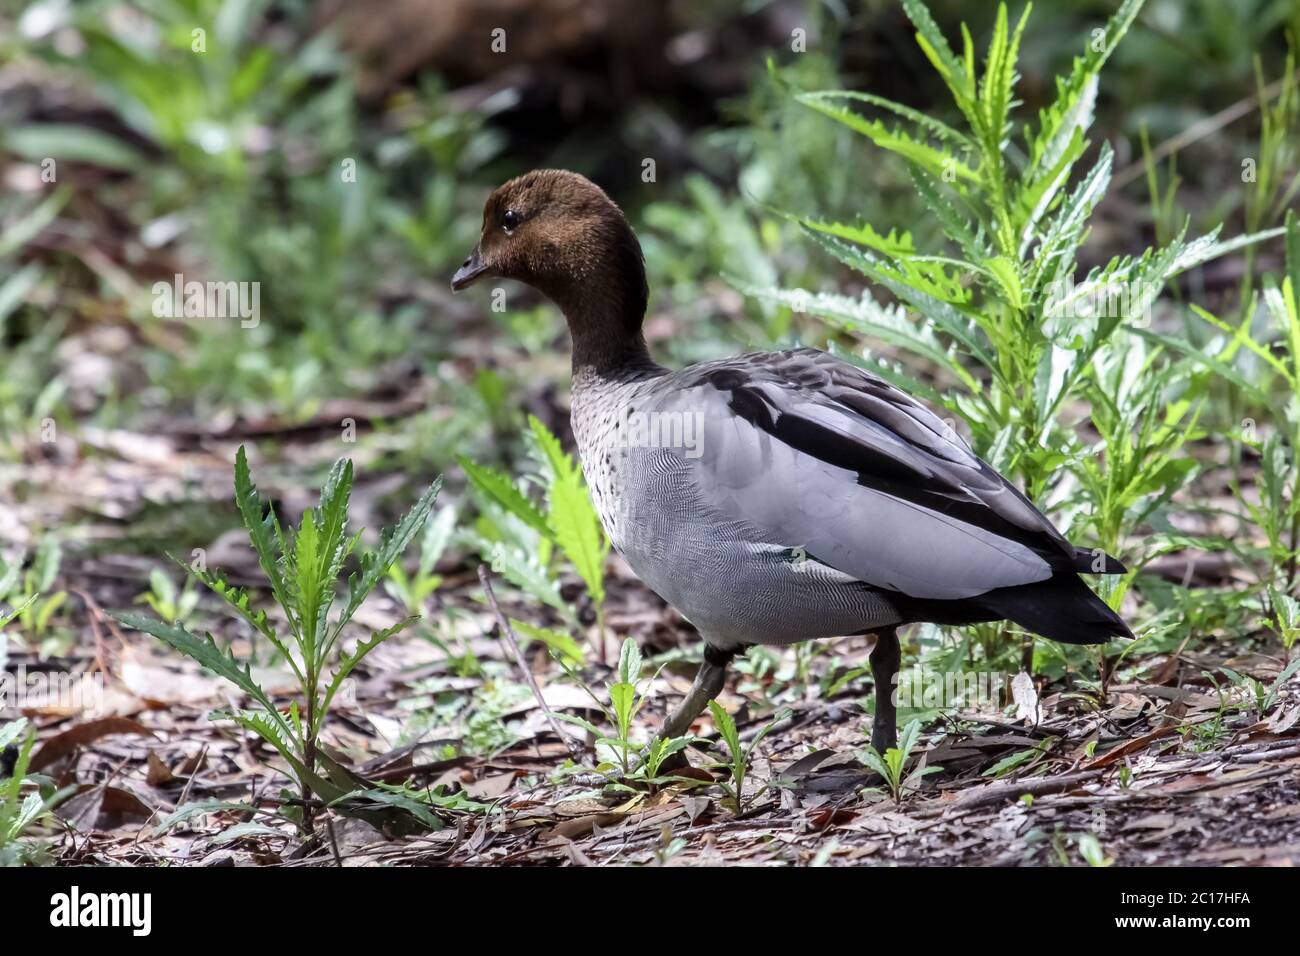 Close up of an Australian wood duck, Girraween National Park, Queensland, Australia Stock Photo